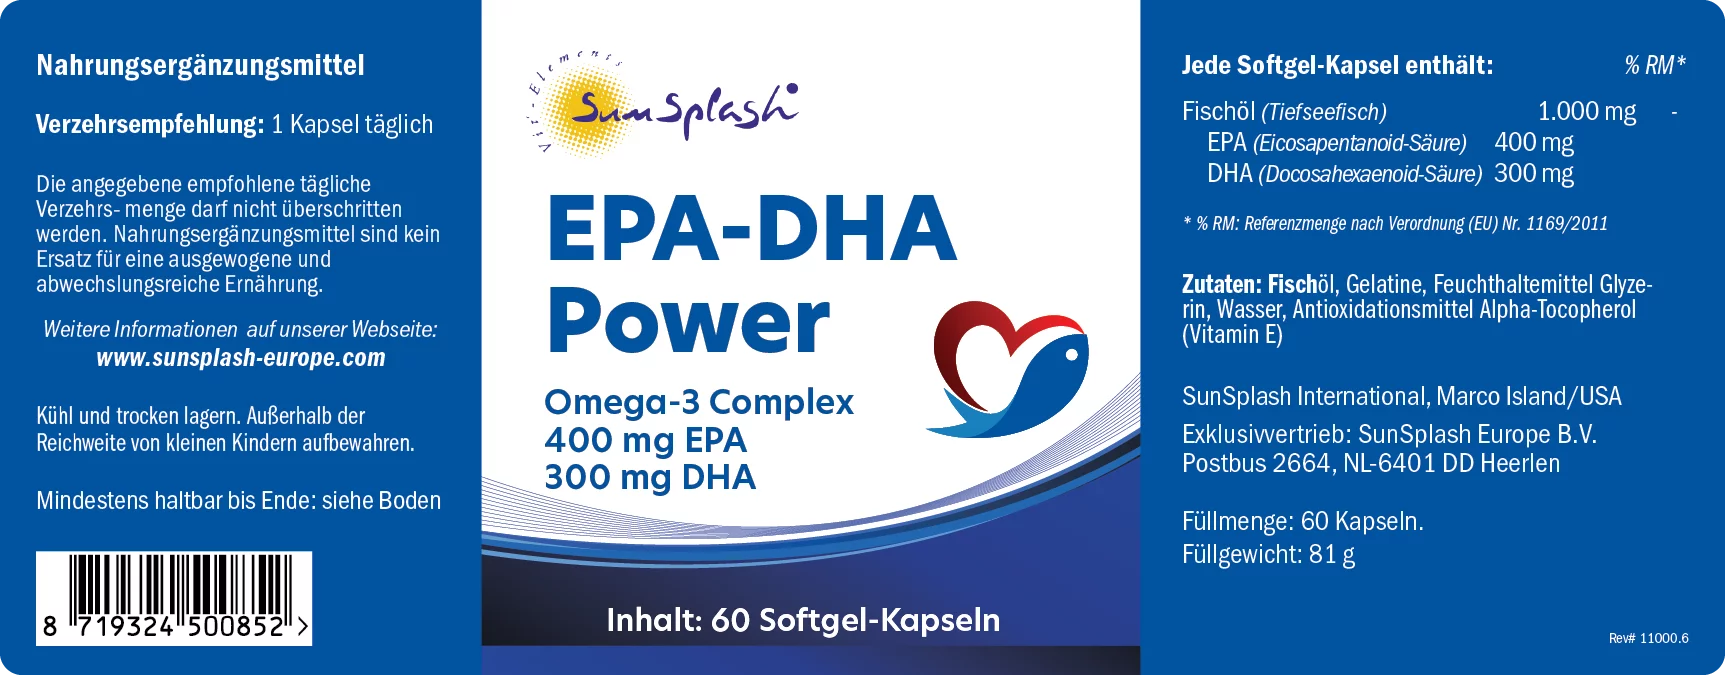 EPA-DHA Power (60 capsule softgel)